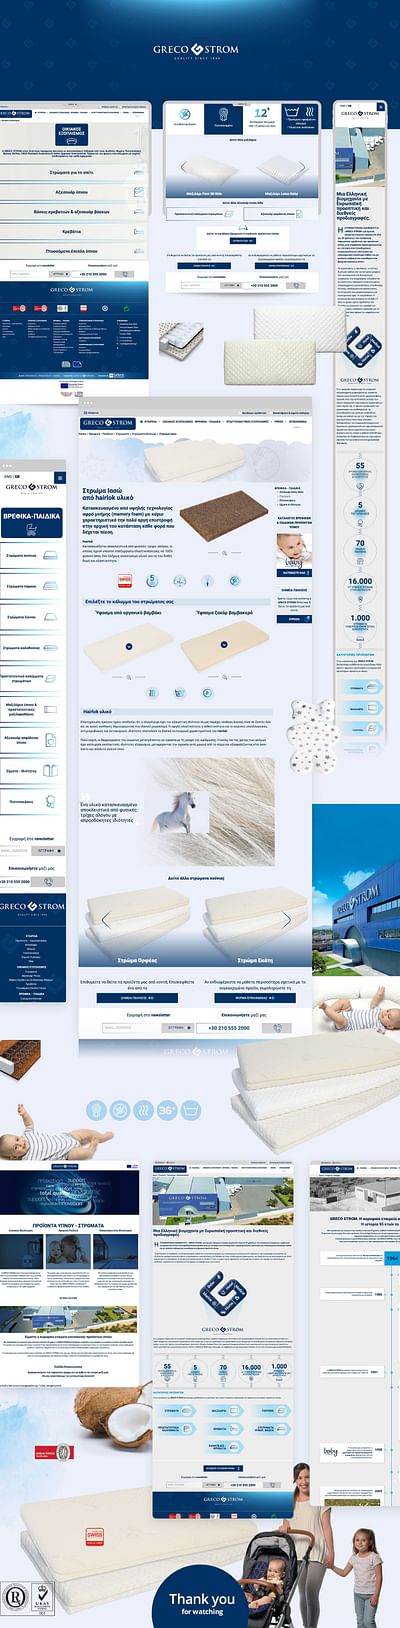 GRECO STROM Sleep mattresses - Estrategia digital